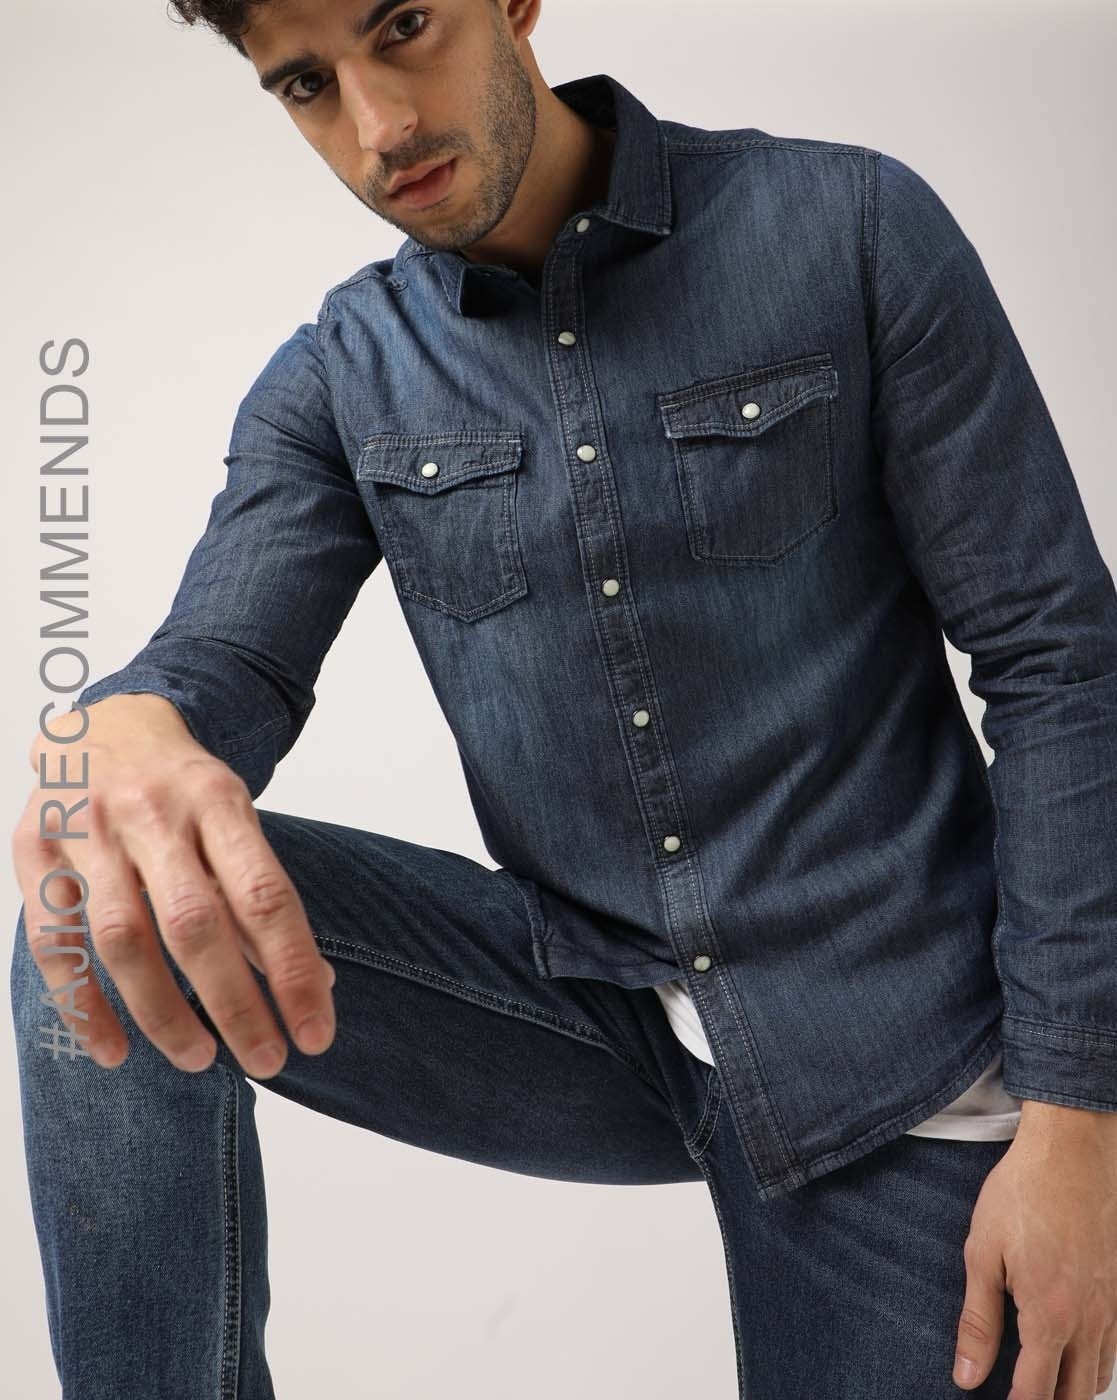 Blue Camo Pants and a Denim Shirt | jeanofalltrades